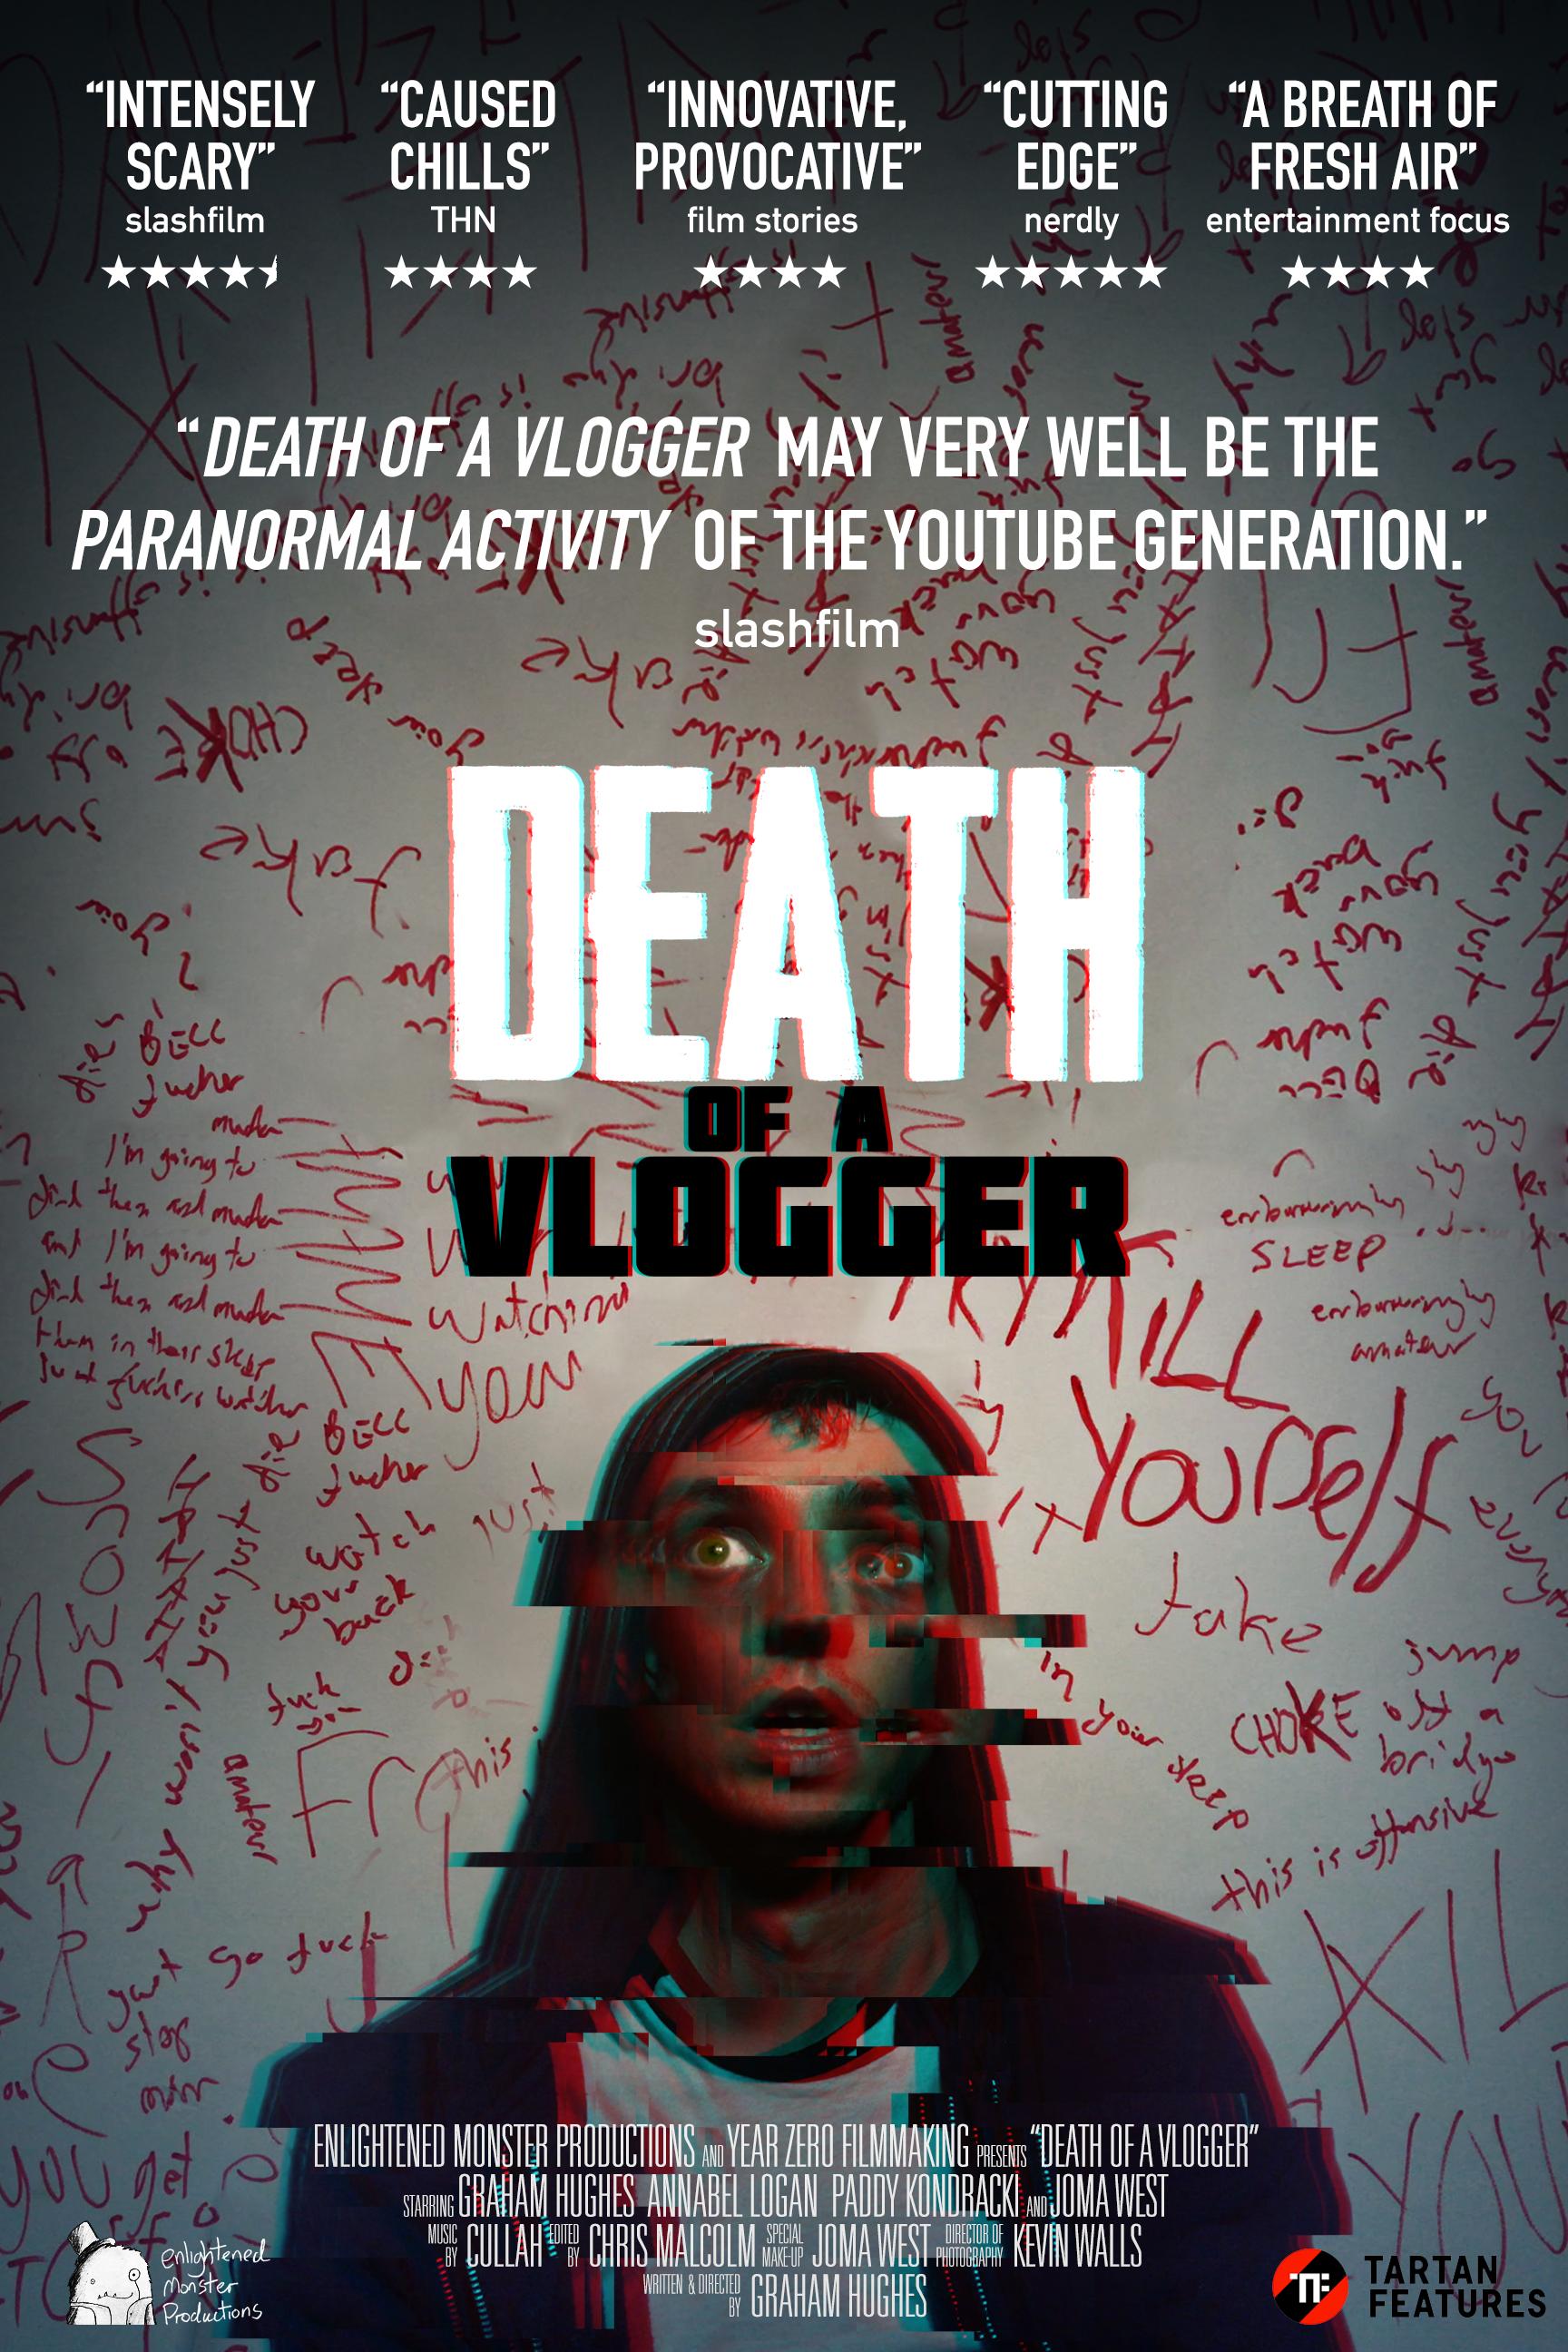 Nonton film Death of a Vlogger layarkaca21 indoxx1 ganool online streaming terbaru